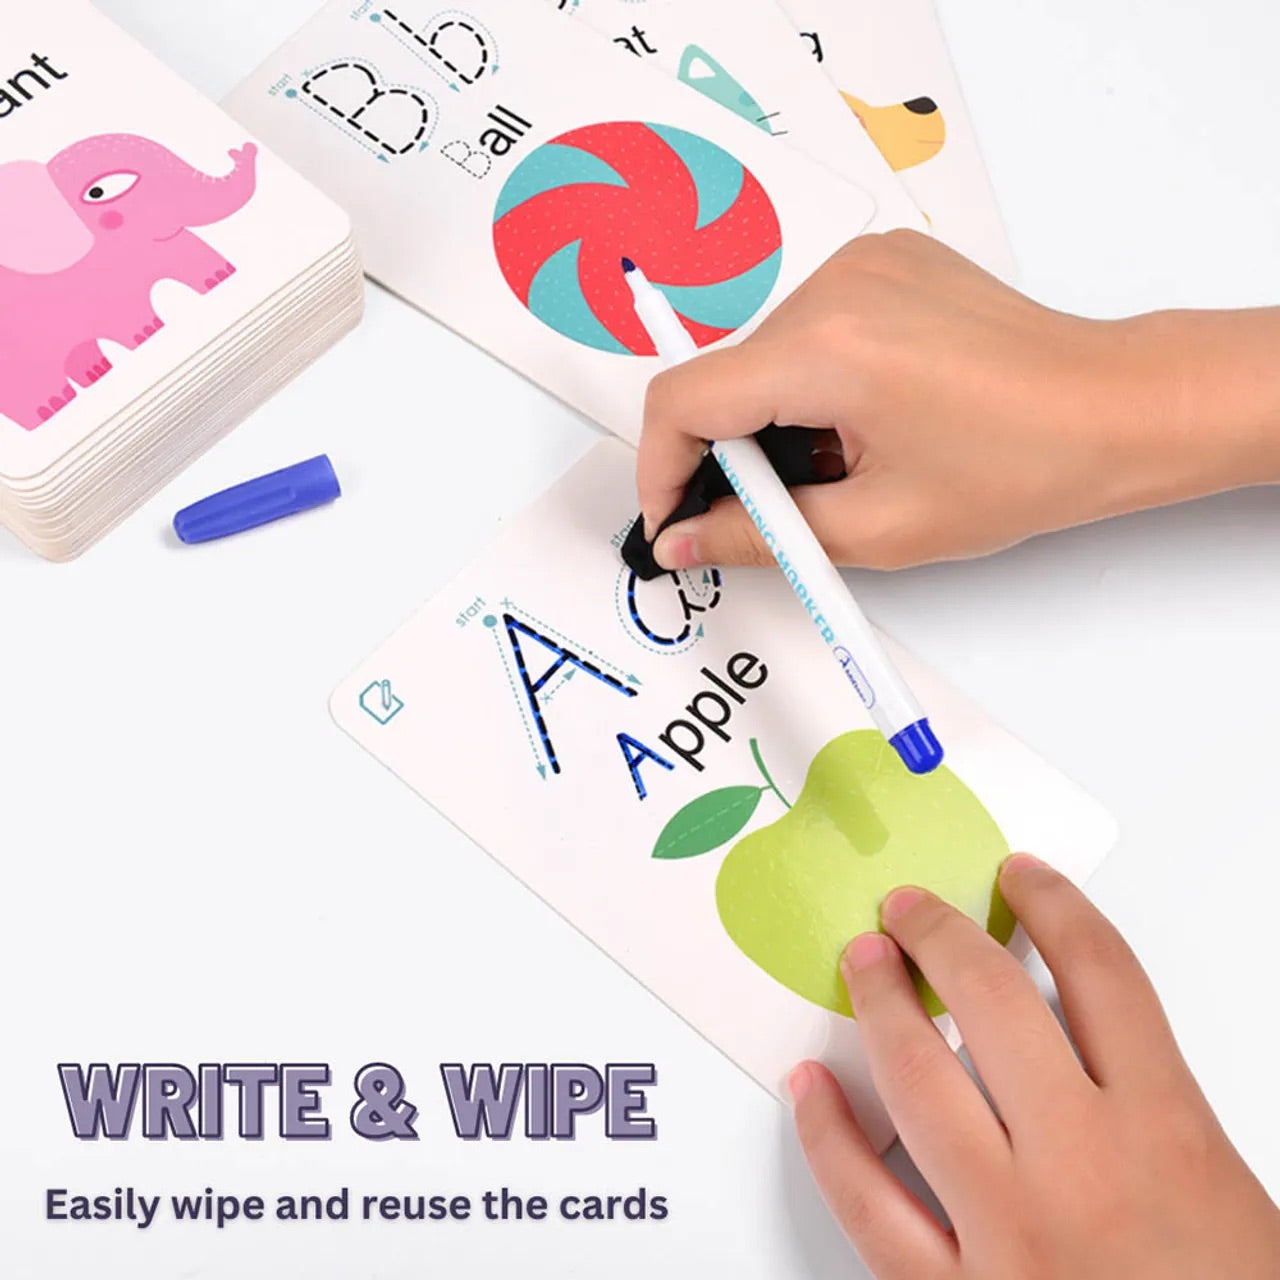 Mideer - Write & Wipe Cards 123 & ABC